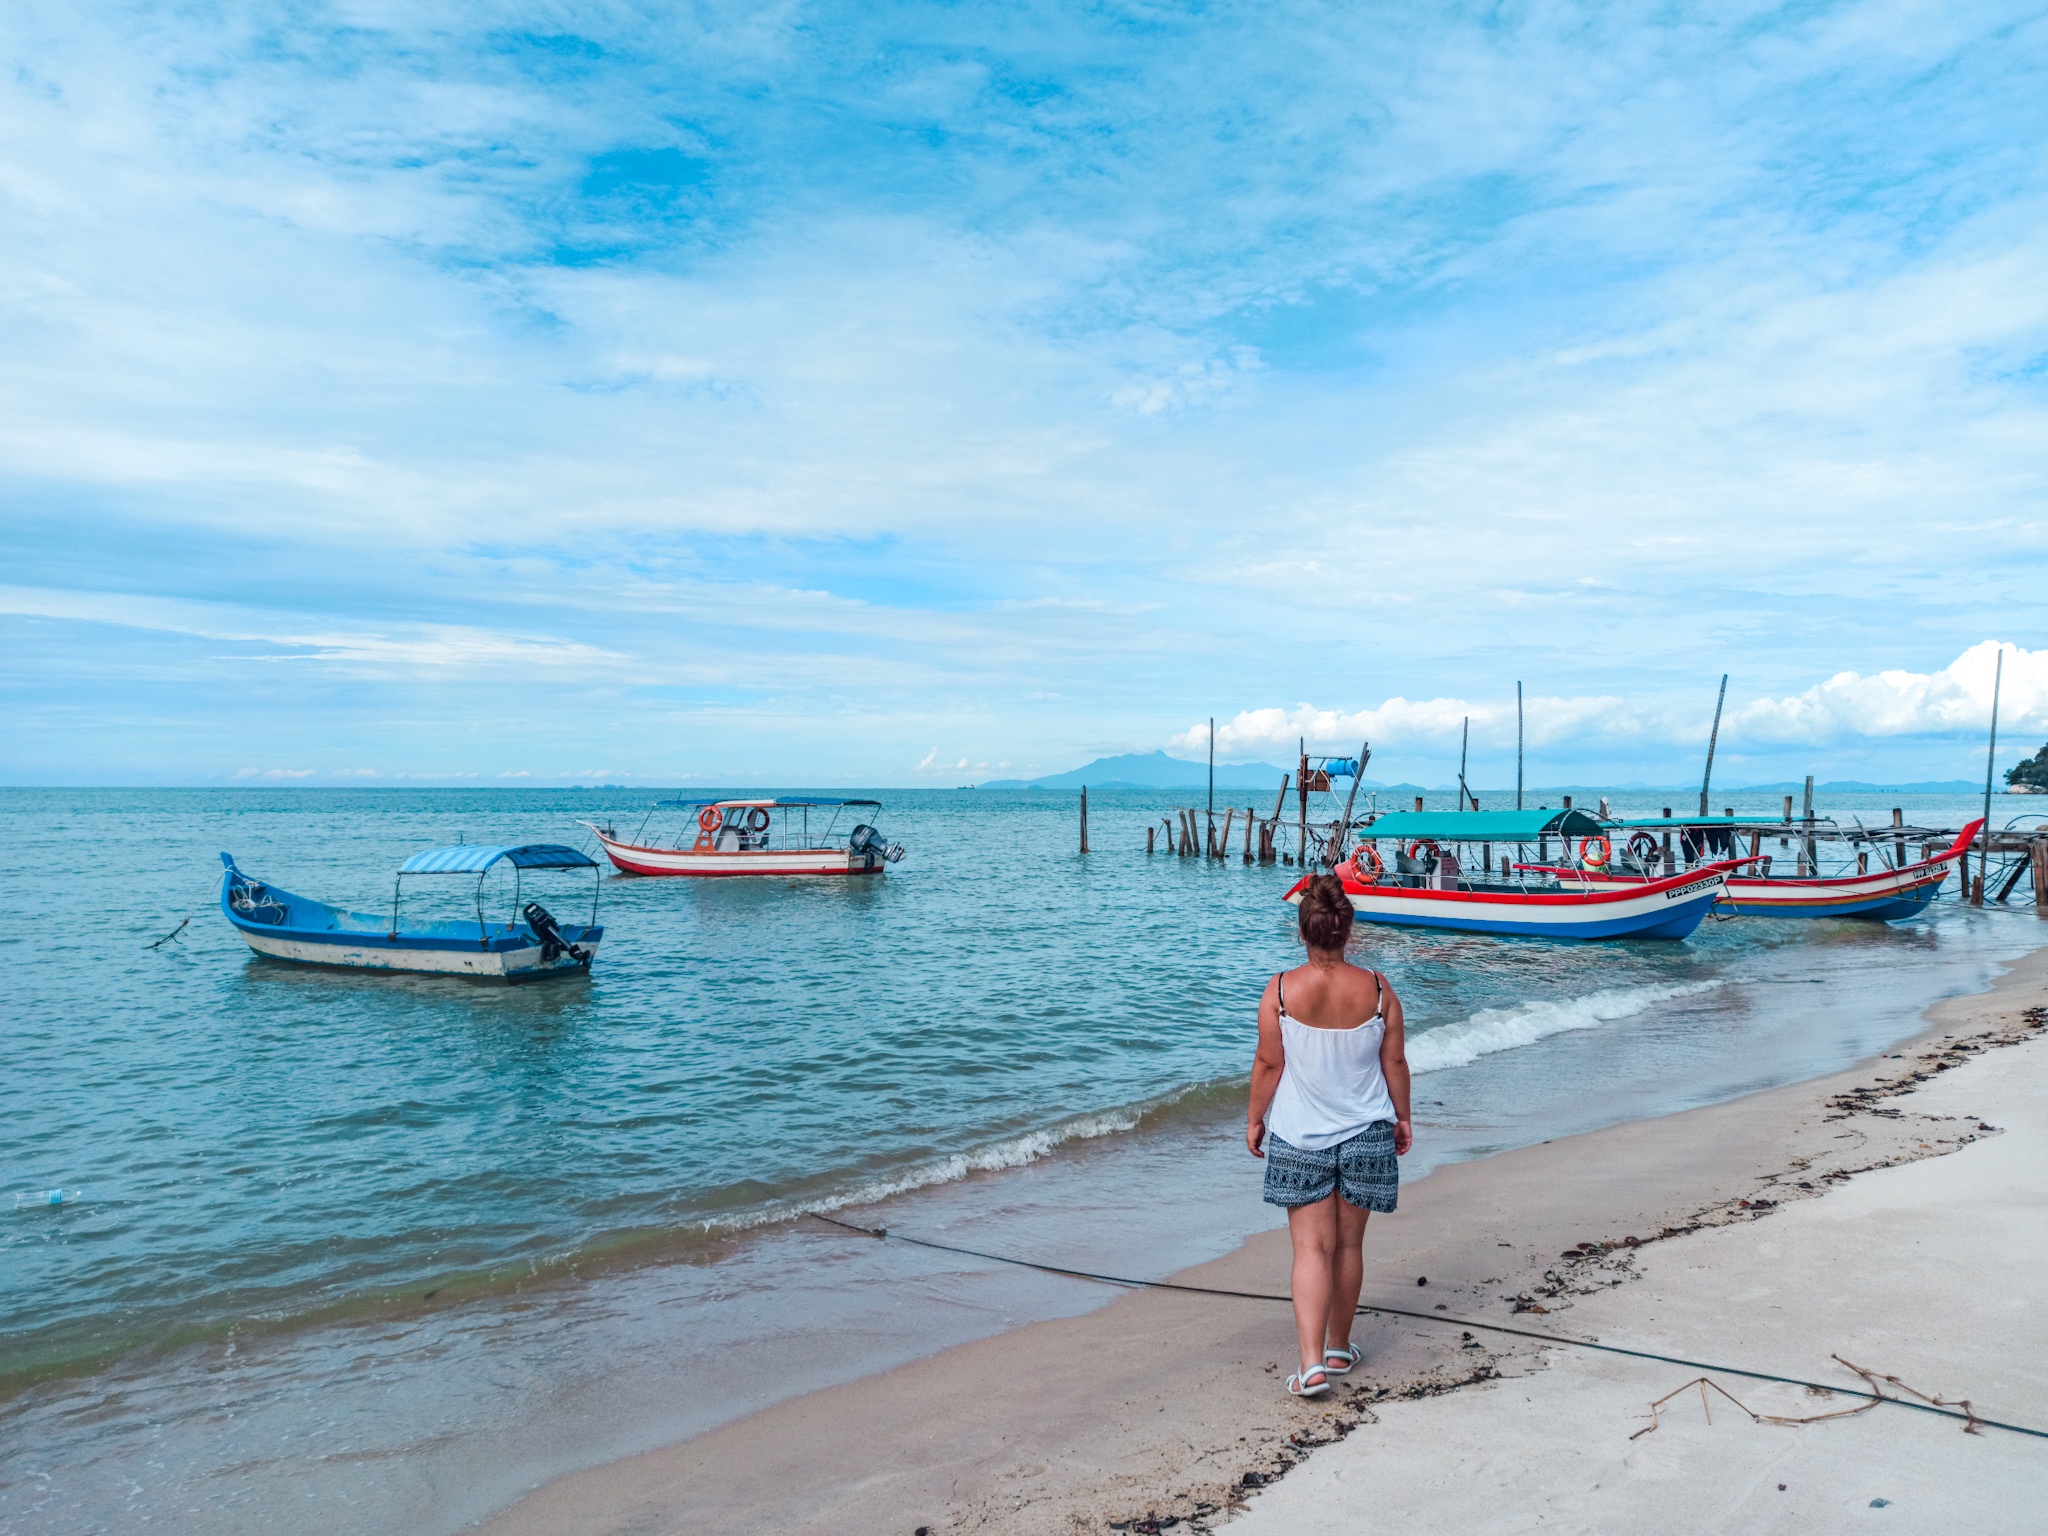 Teluk Bahang, un pueblo pesquero precioso que ver en Penang